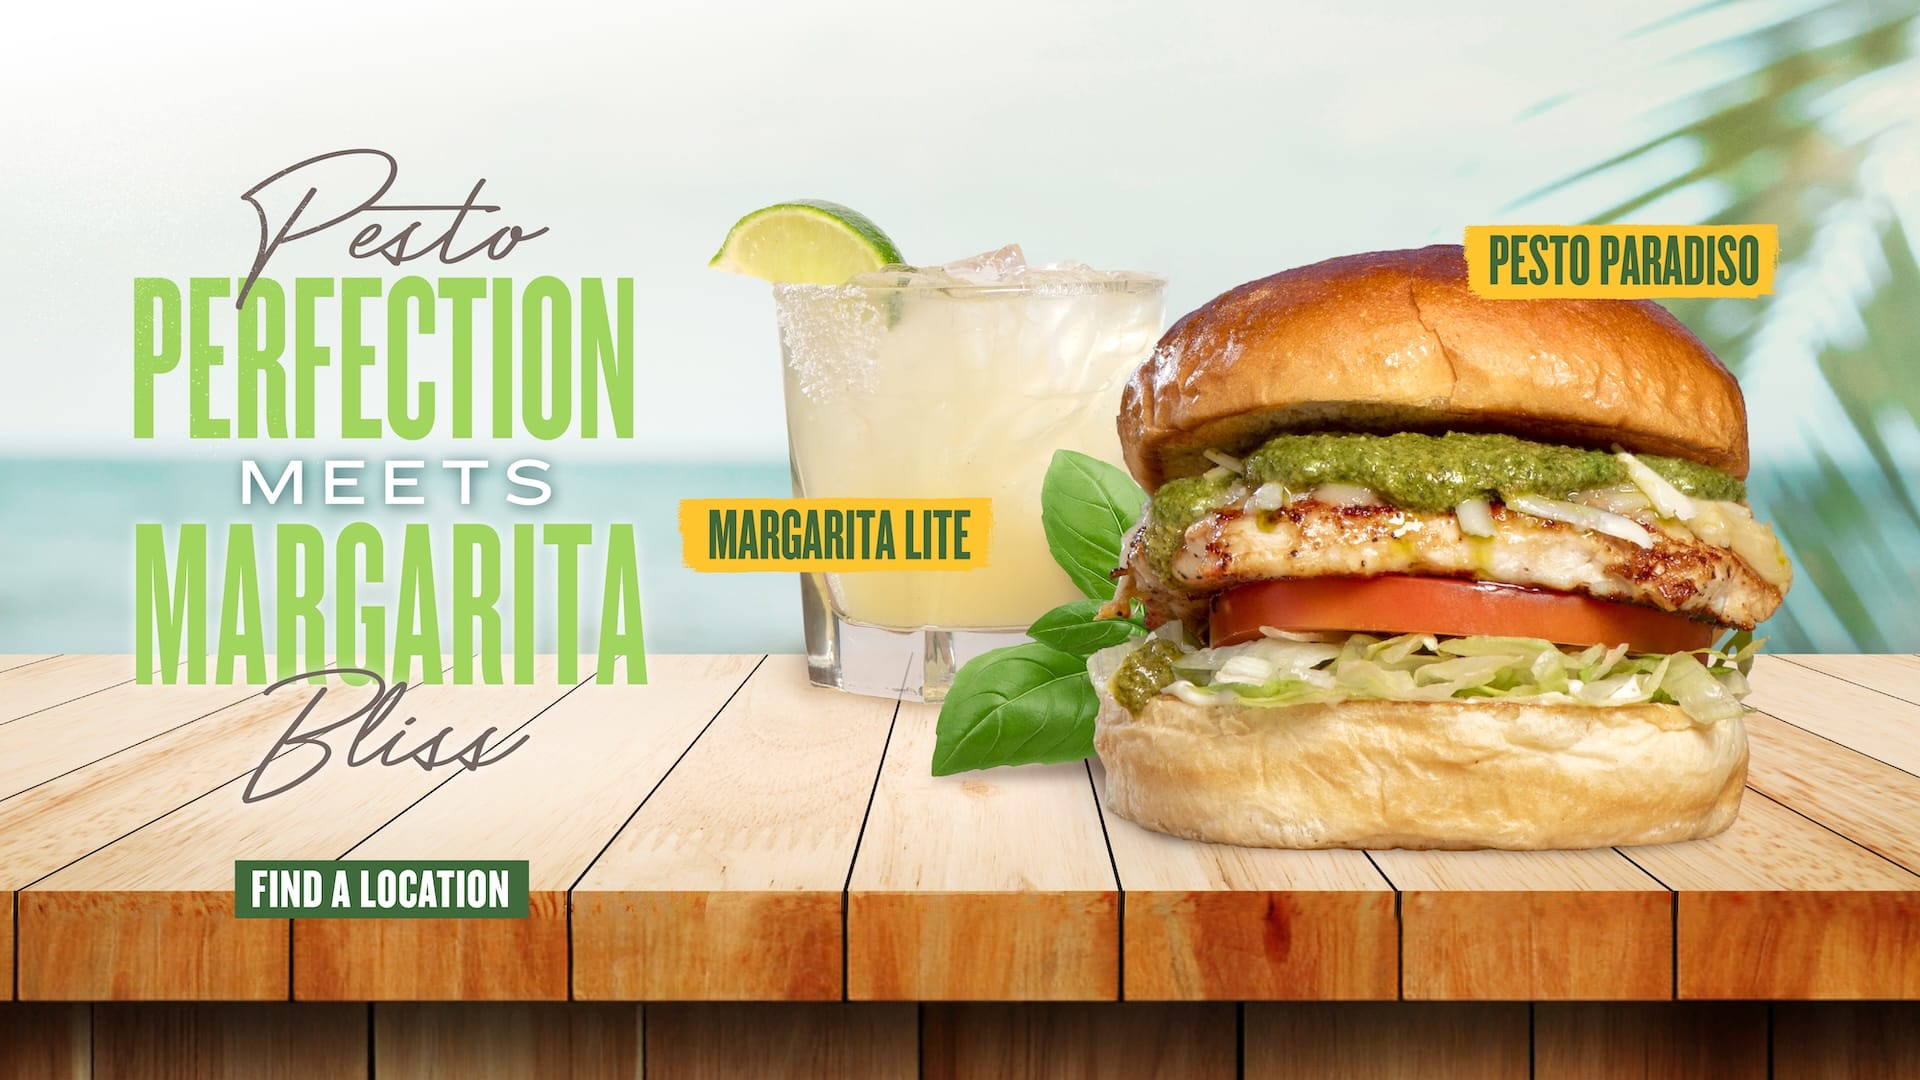 Pesto Perfection Meets Margarita Bliss - Find a Location - Margarita Lite - Pesto Paradiso